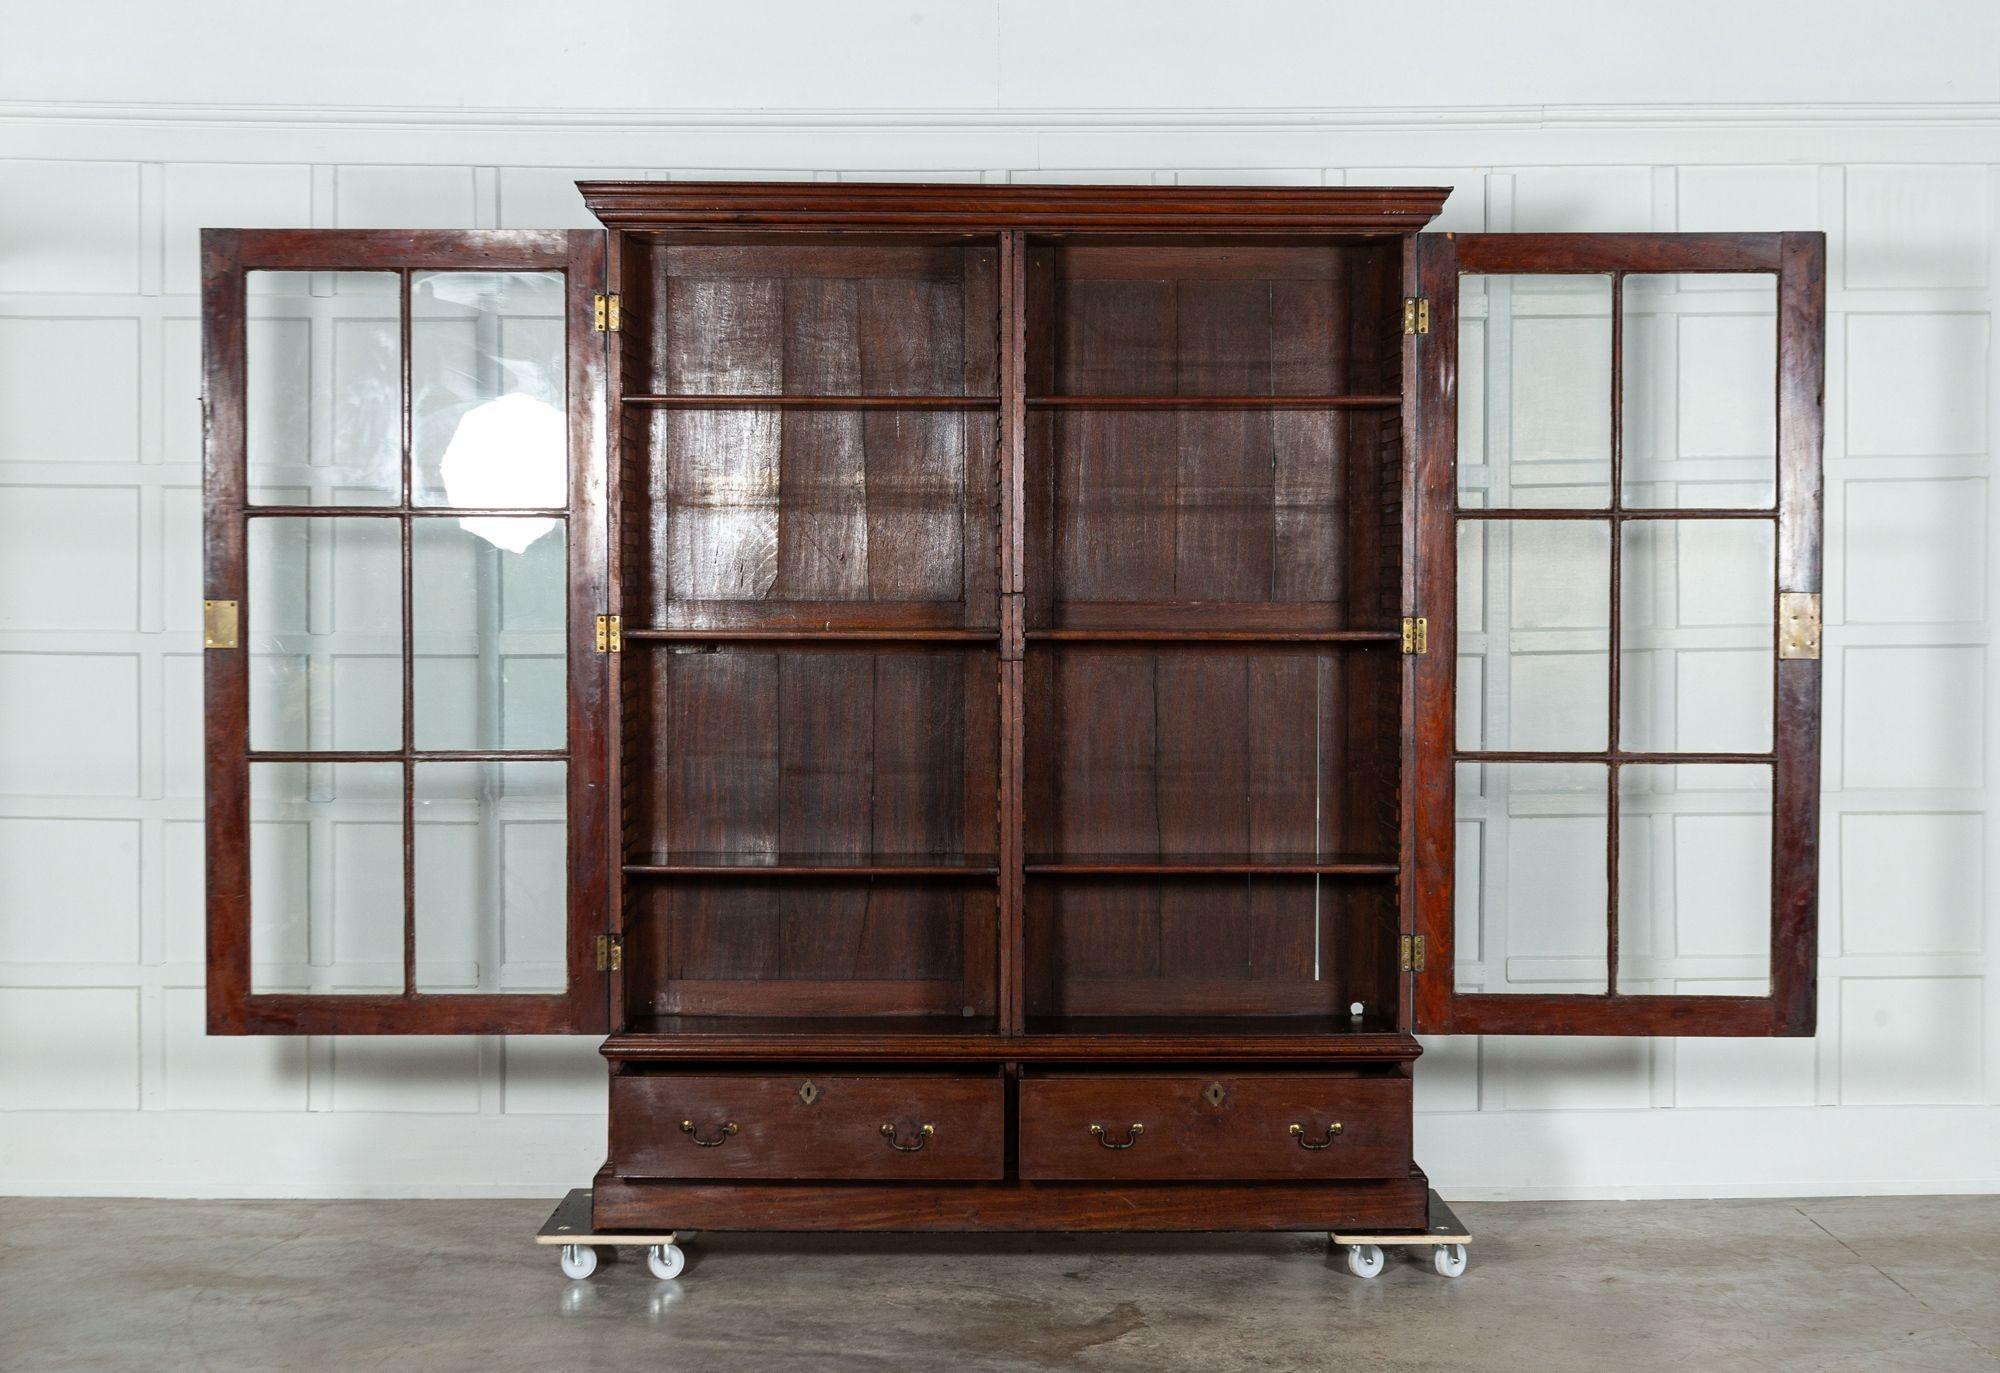 circa 1880
Large 19thC English Mahogany Glazed Bookcase
sku 1606B
Base W177 x D41 x H42 cm
Top W186 x D45 x H181 cm
Together W186 x D45 x H223 cm